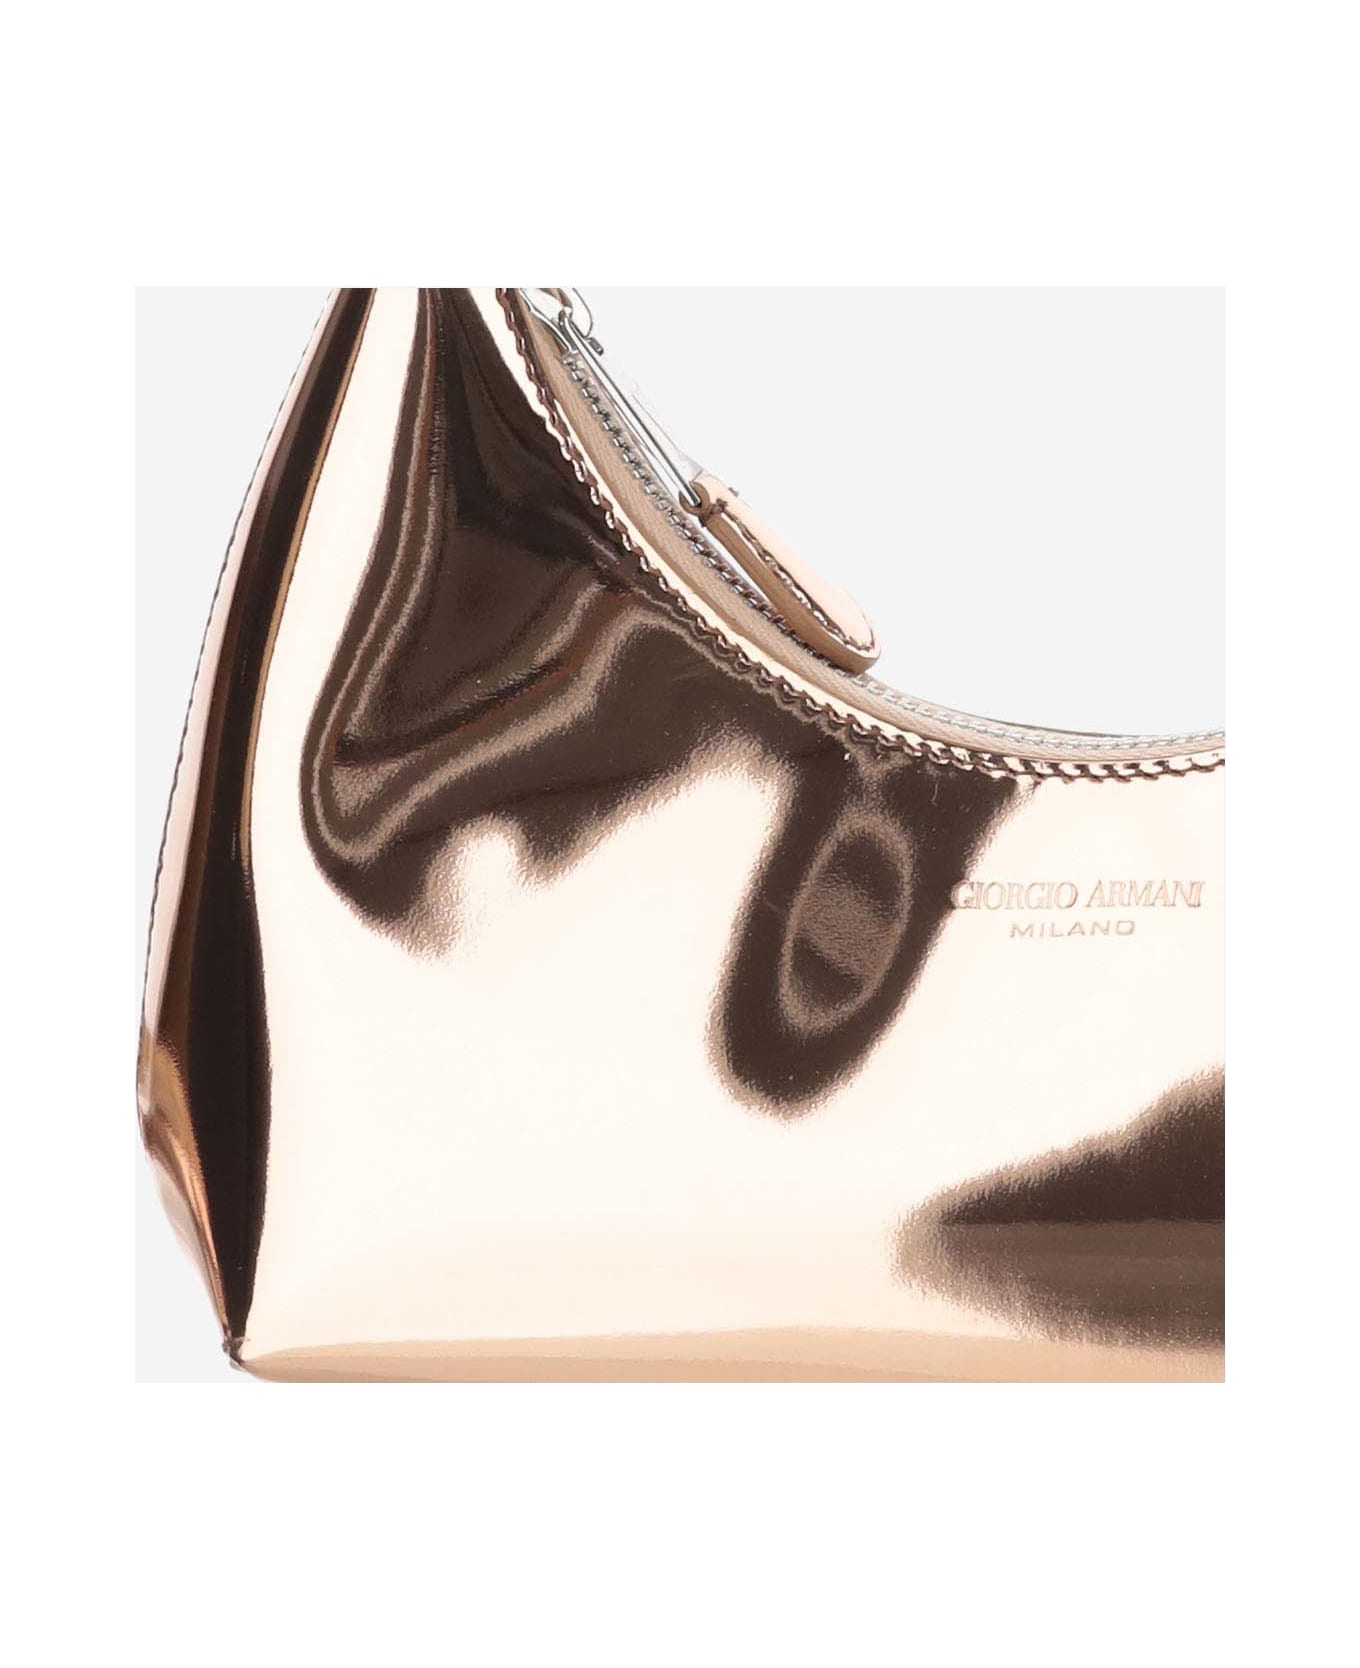 Giorgio Armani Metallic Nappa Leather Bag With Logo - Golden